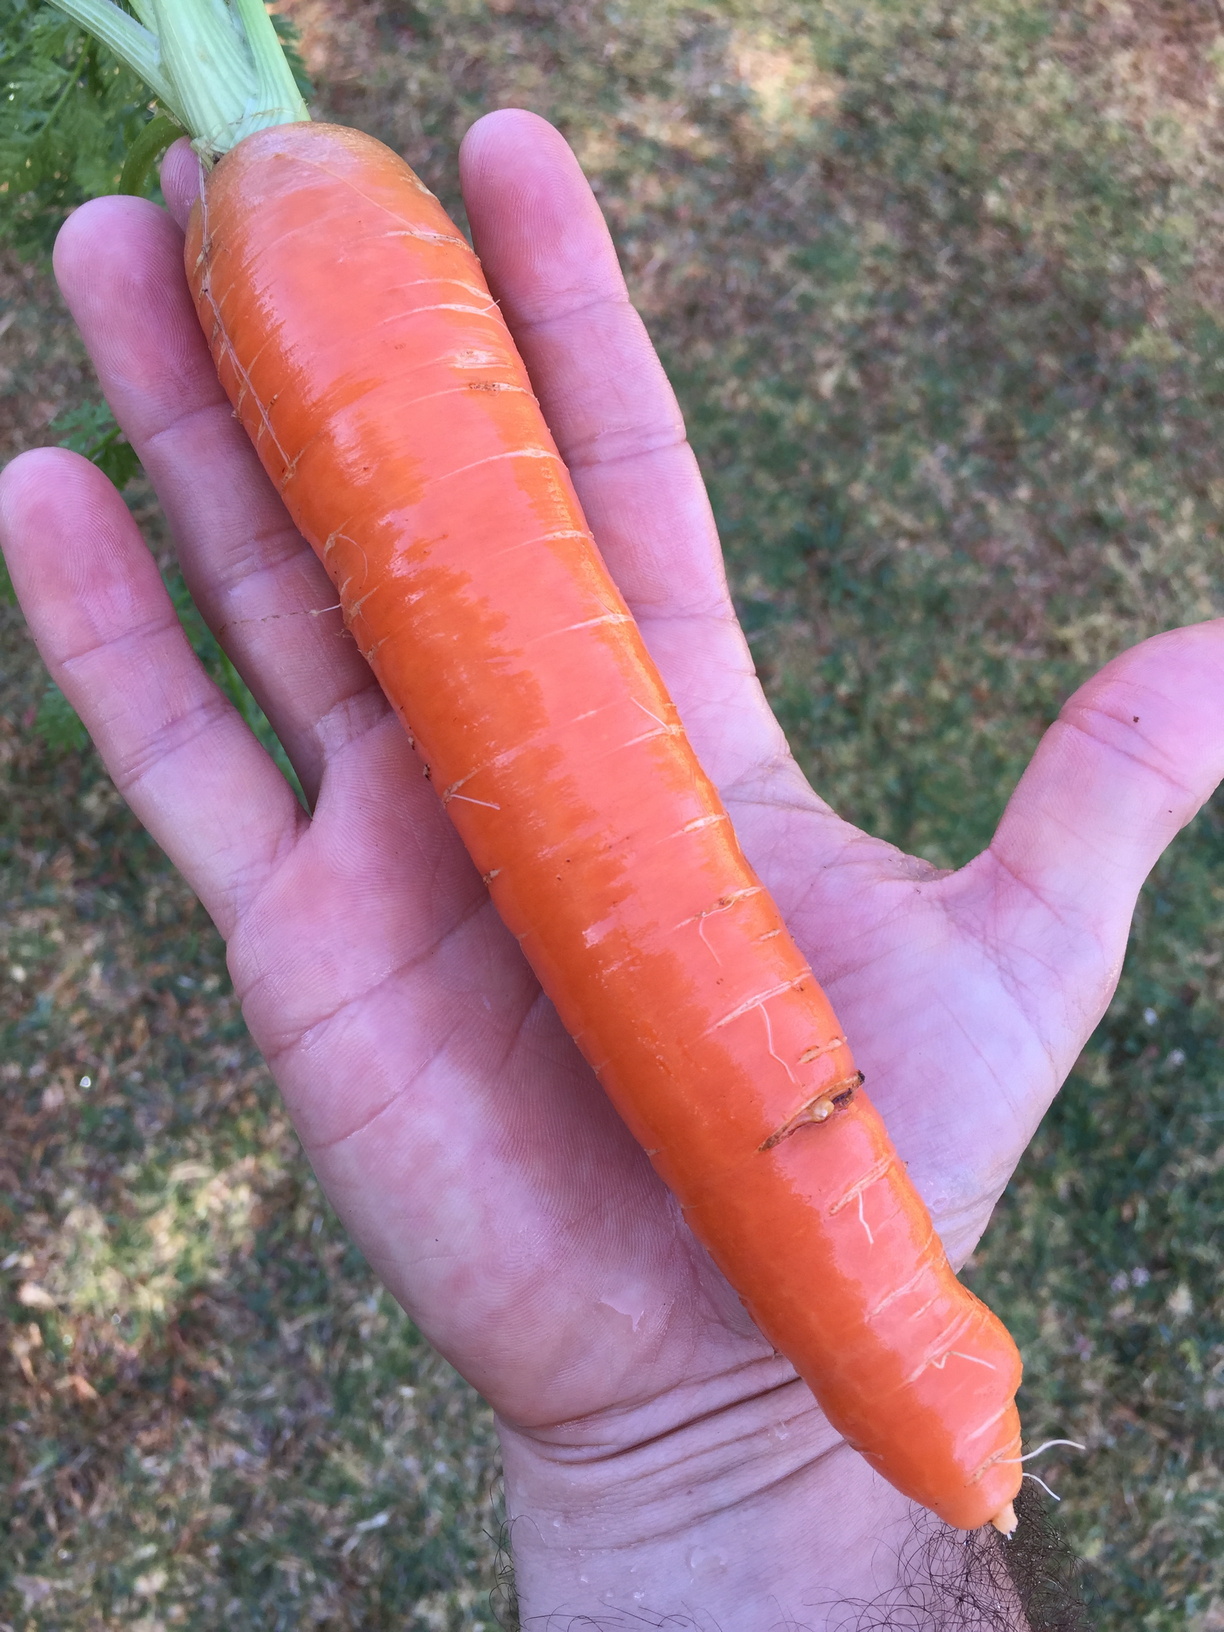 A fine carrot